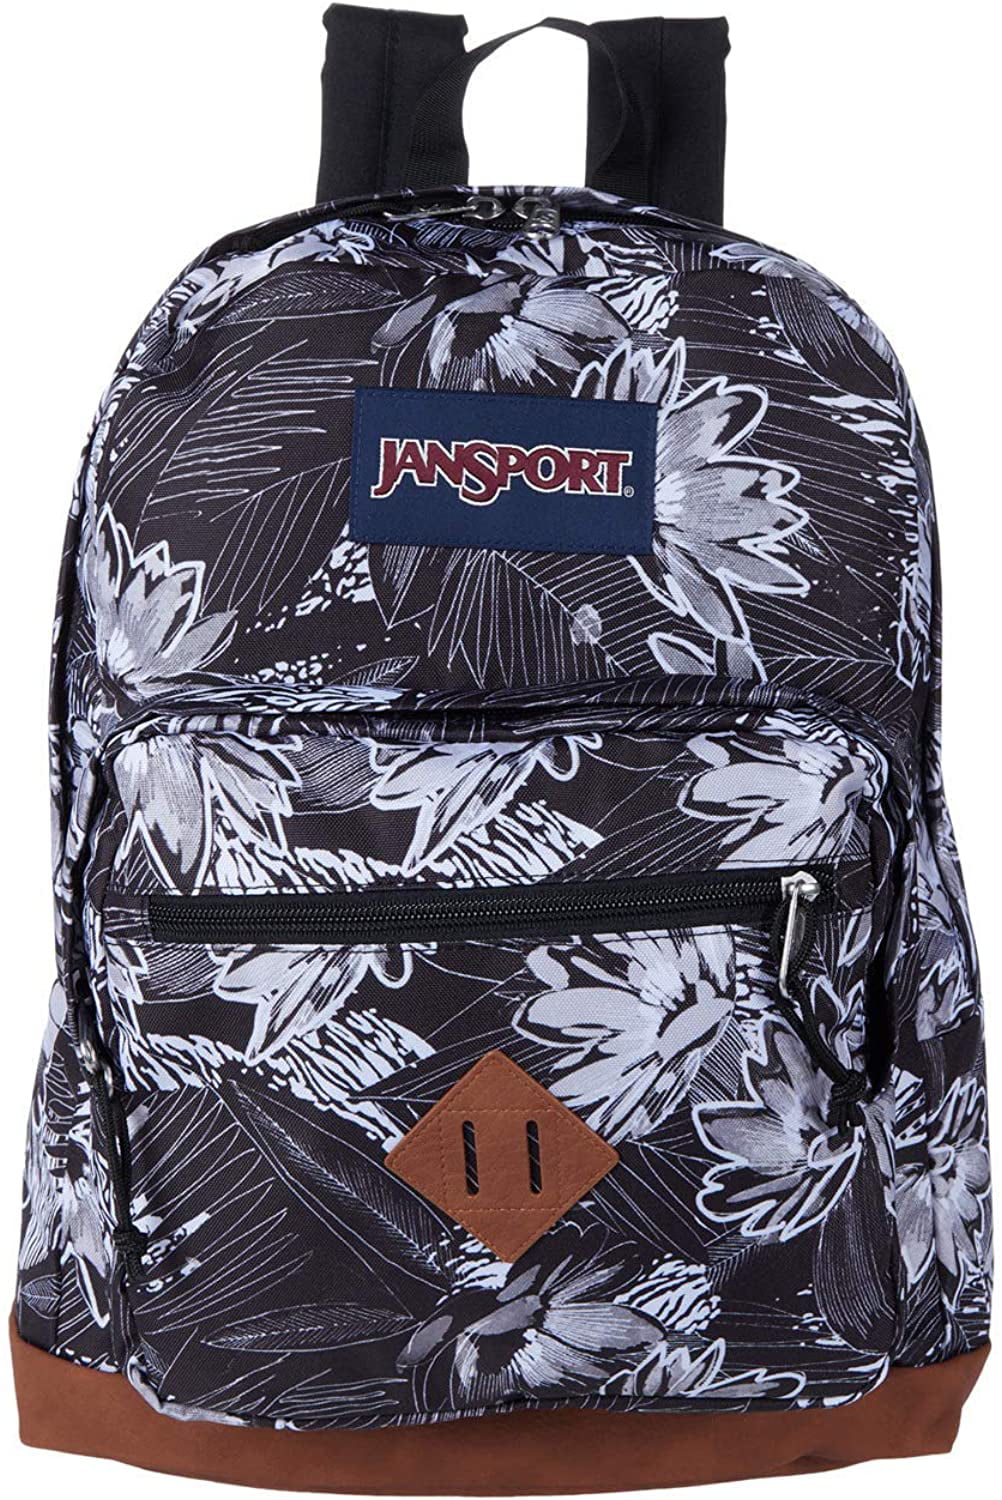 jansport city view backpack black